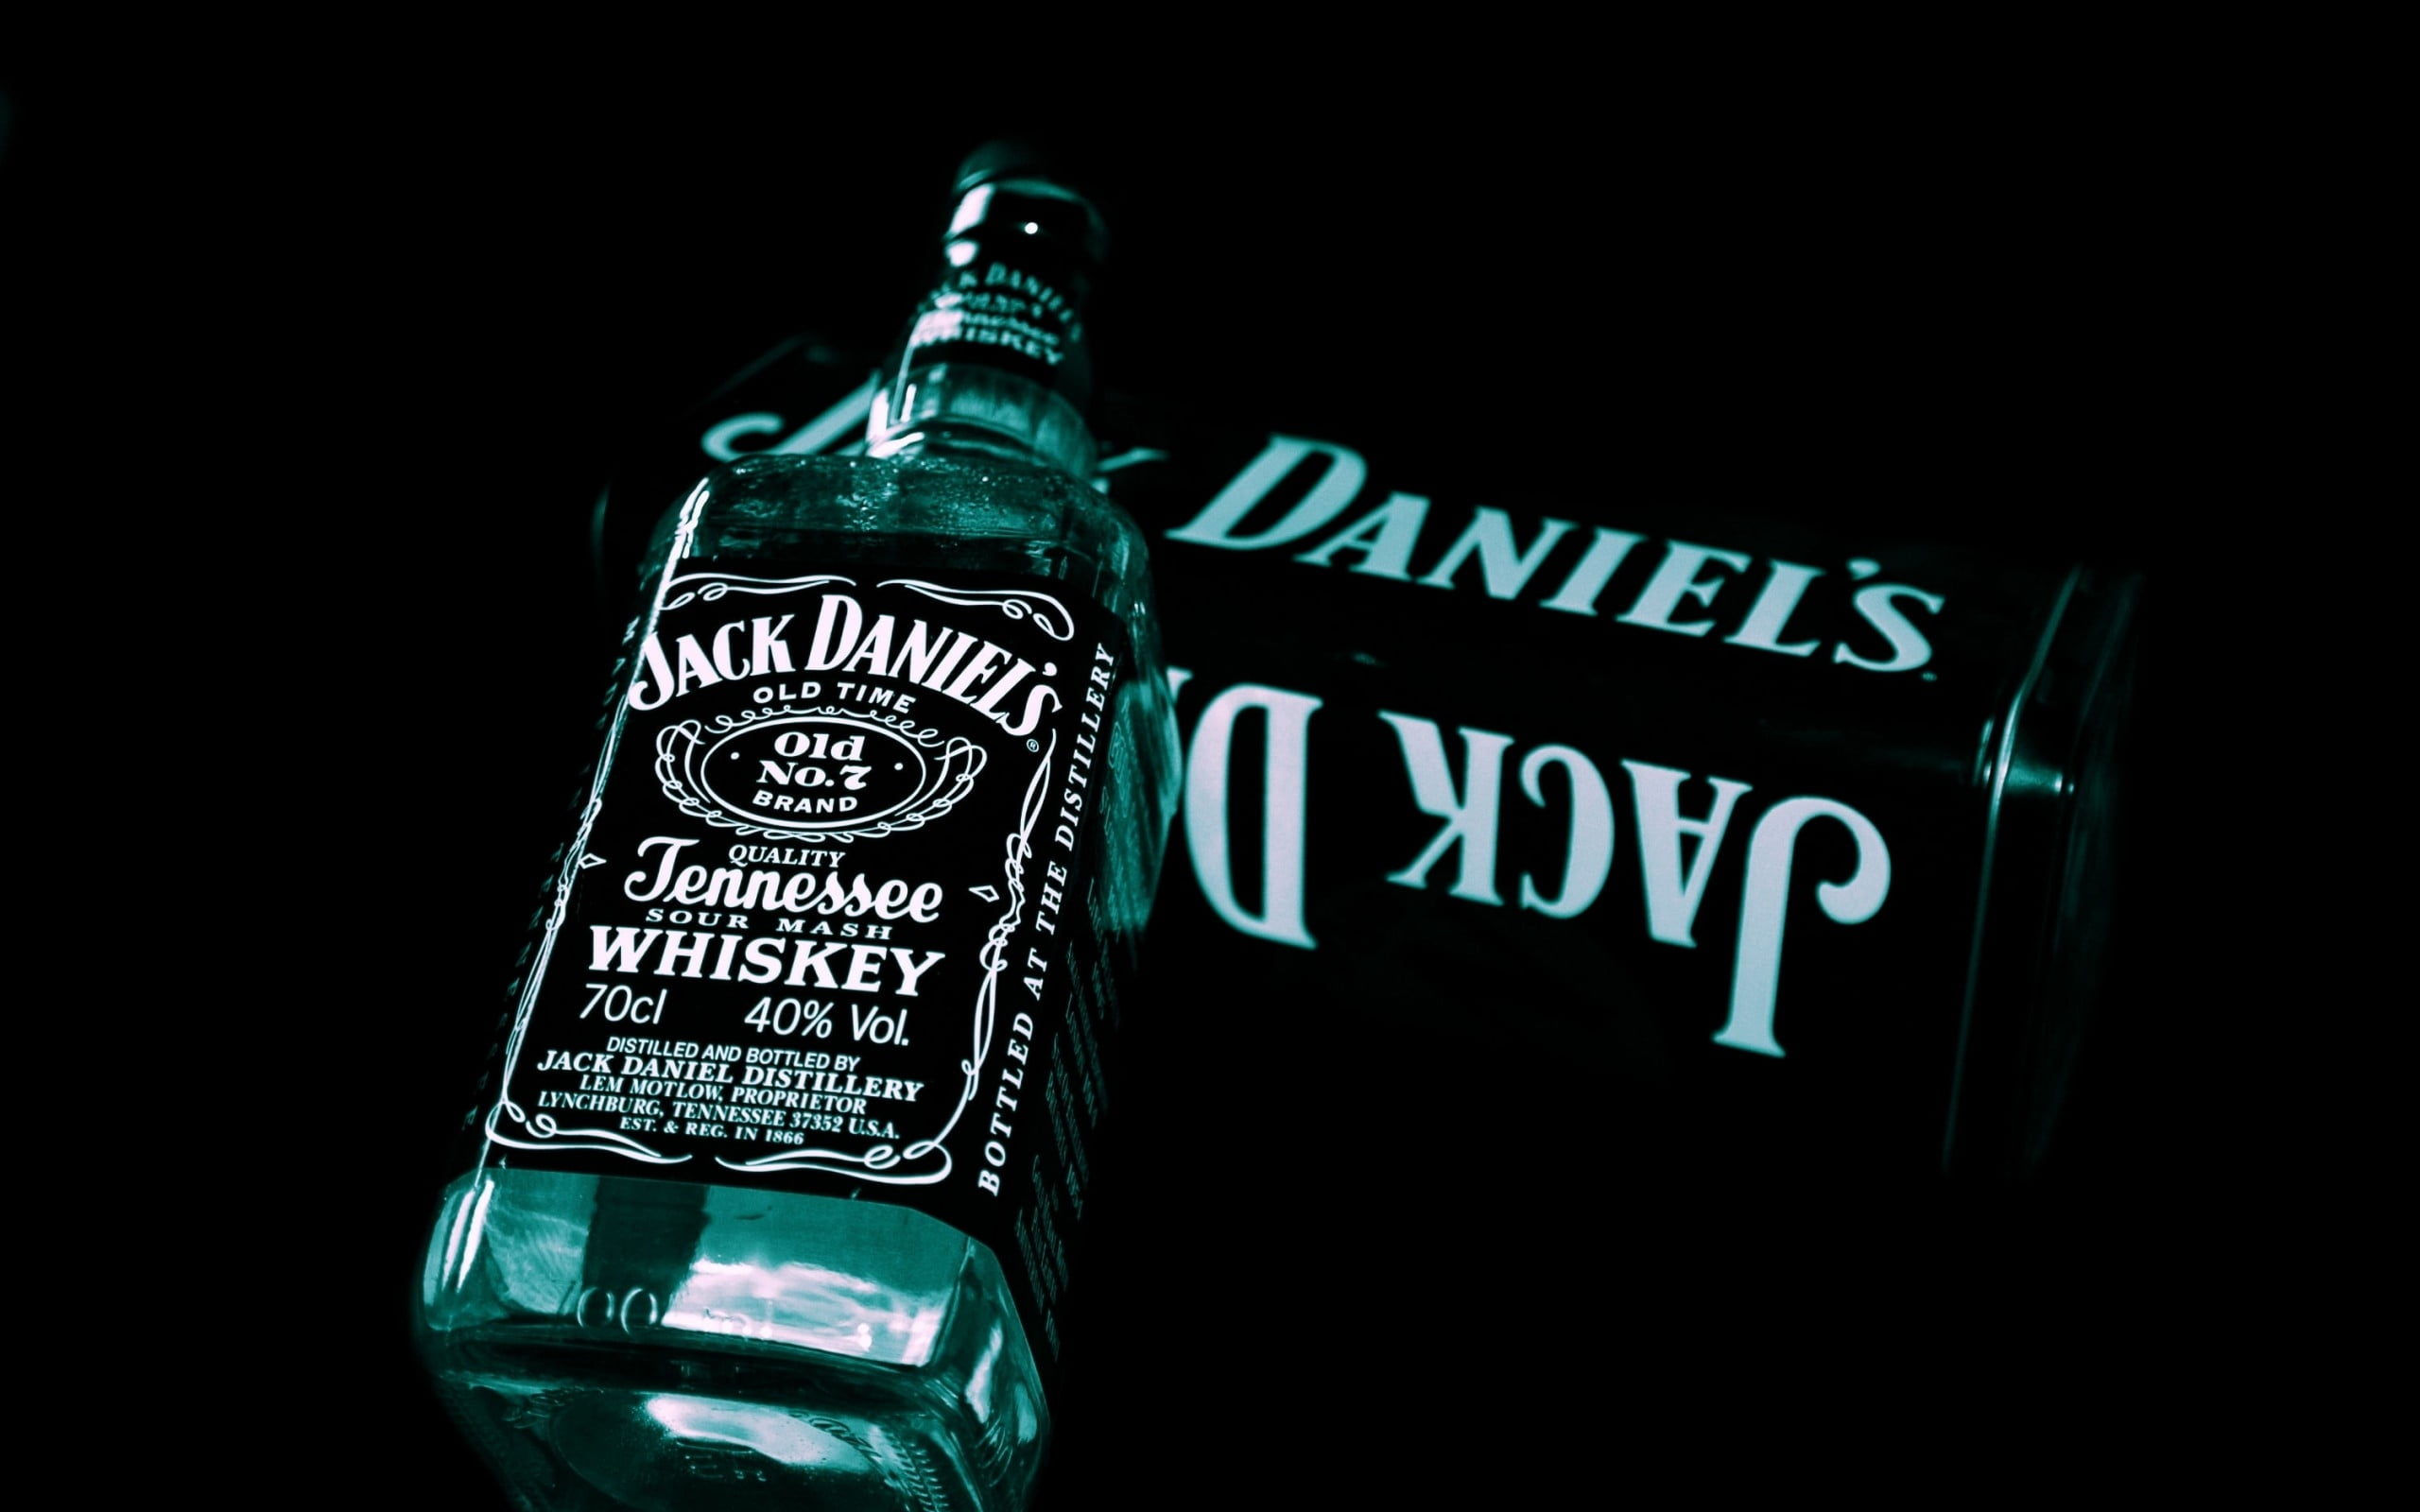 Jack Daniel's Tennessee whiskey wine bottle